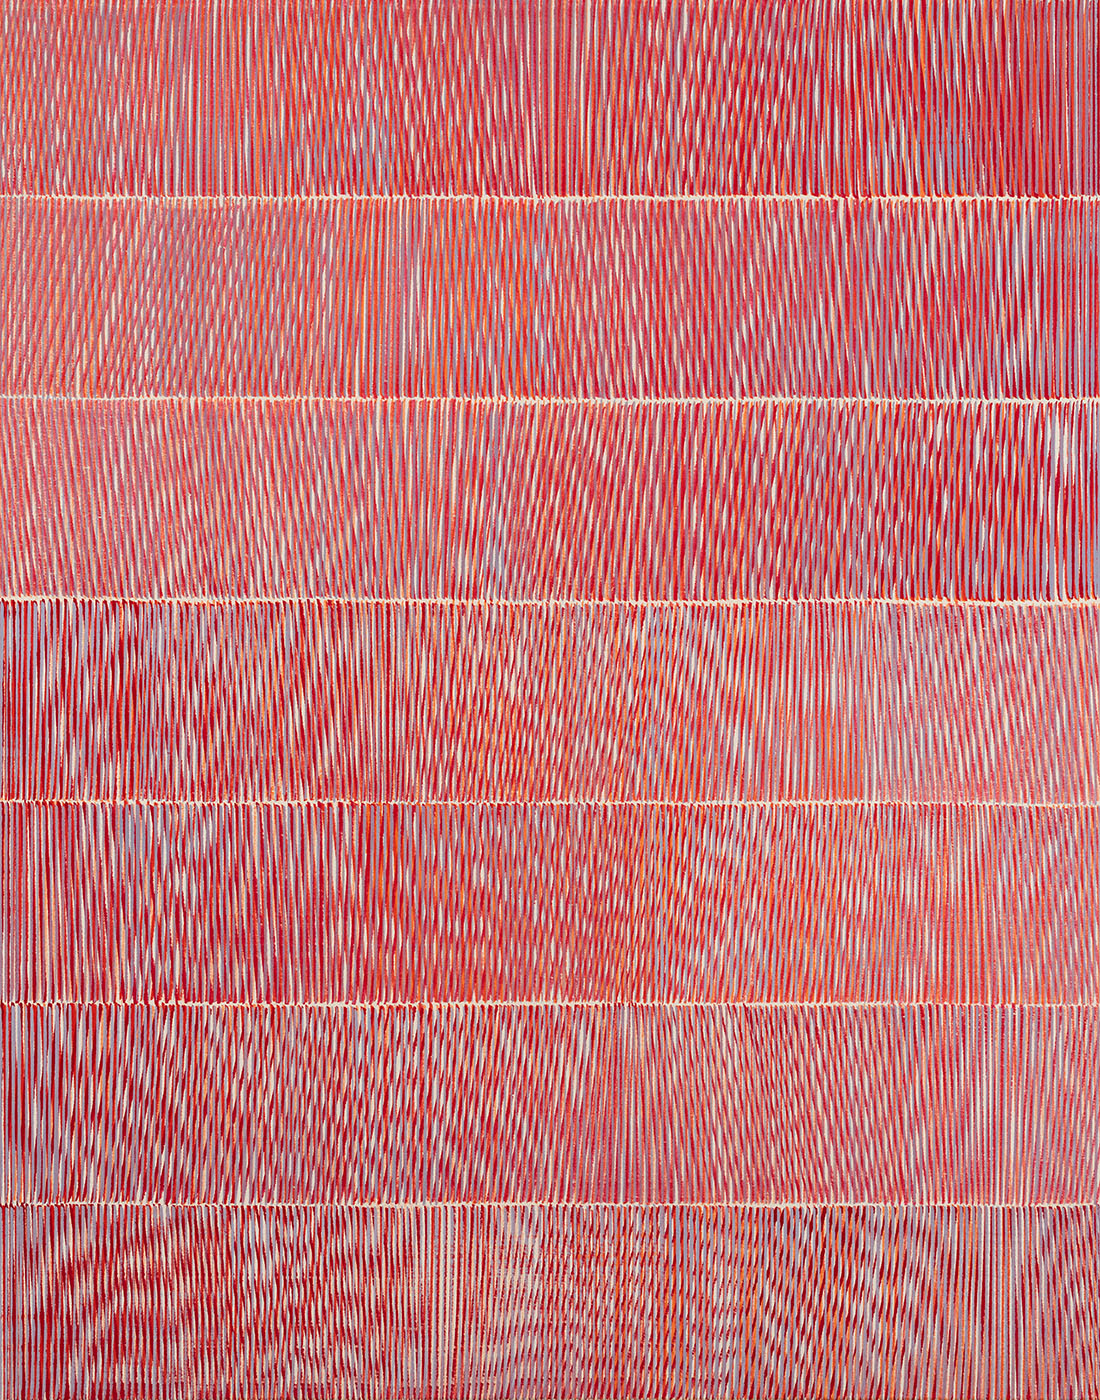 Nikola Dimitrov, KlangRaum VIII, 2021, Pigmente, Bindemittel auf Leinwand, 140 × 110 cm